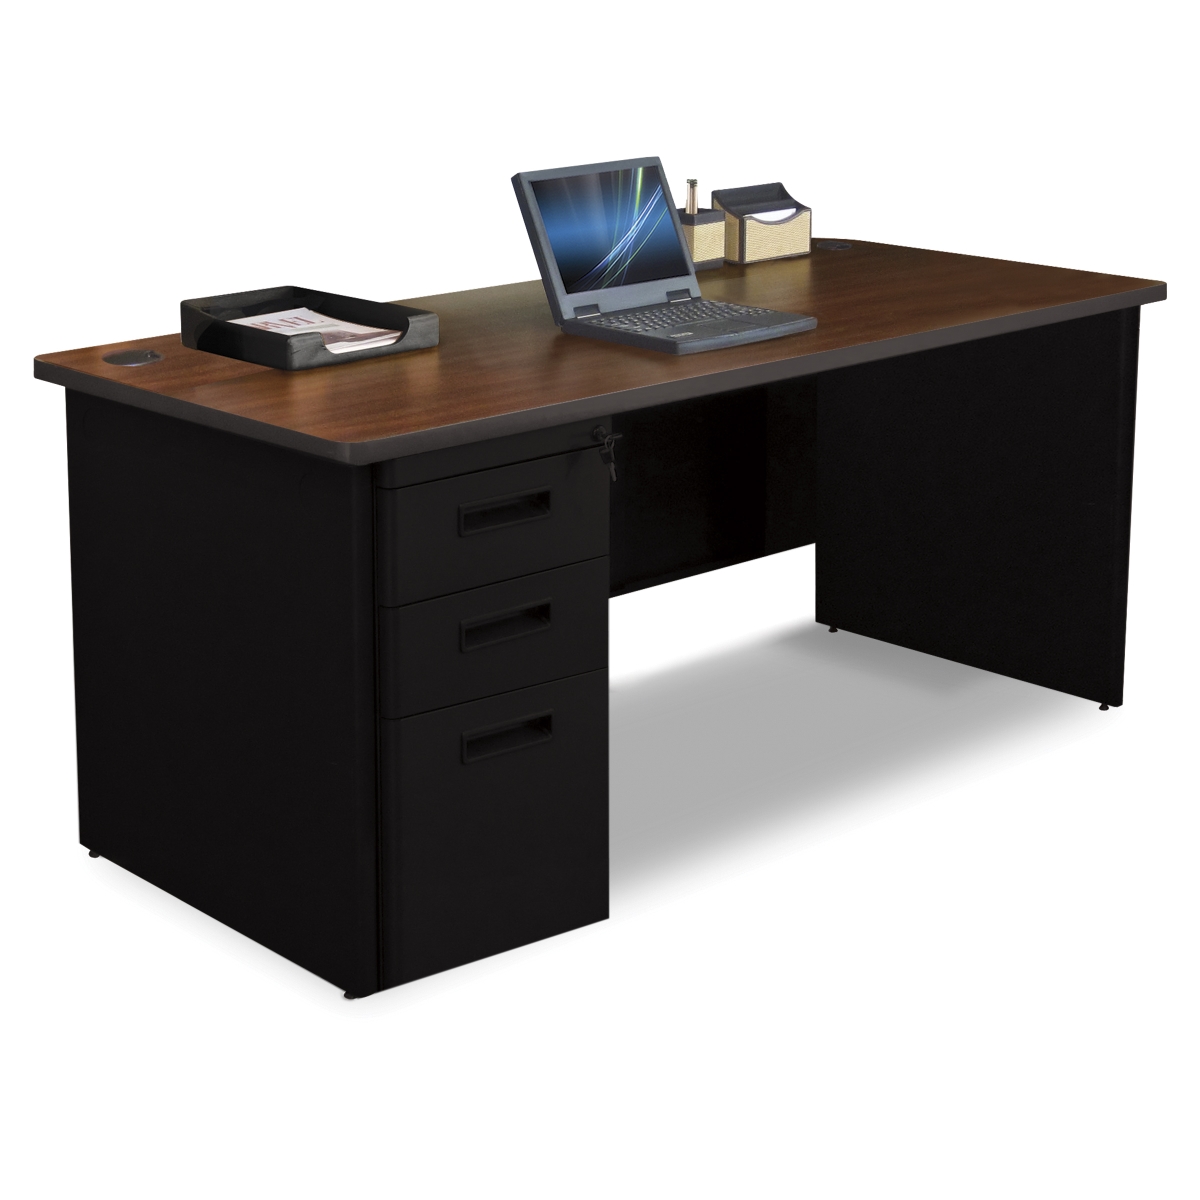 Pdr6630sp-b-bk-madn 66w X 30 D Single Full Pedestal Desk, Mahogany Laminate & Black Finish